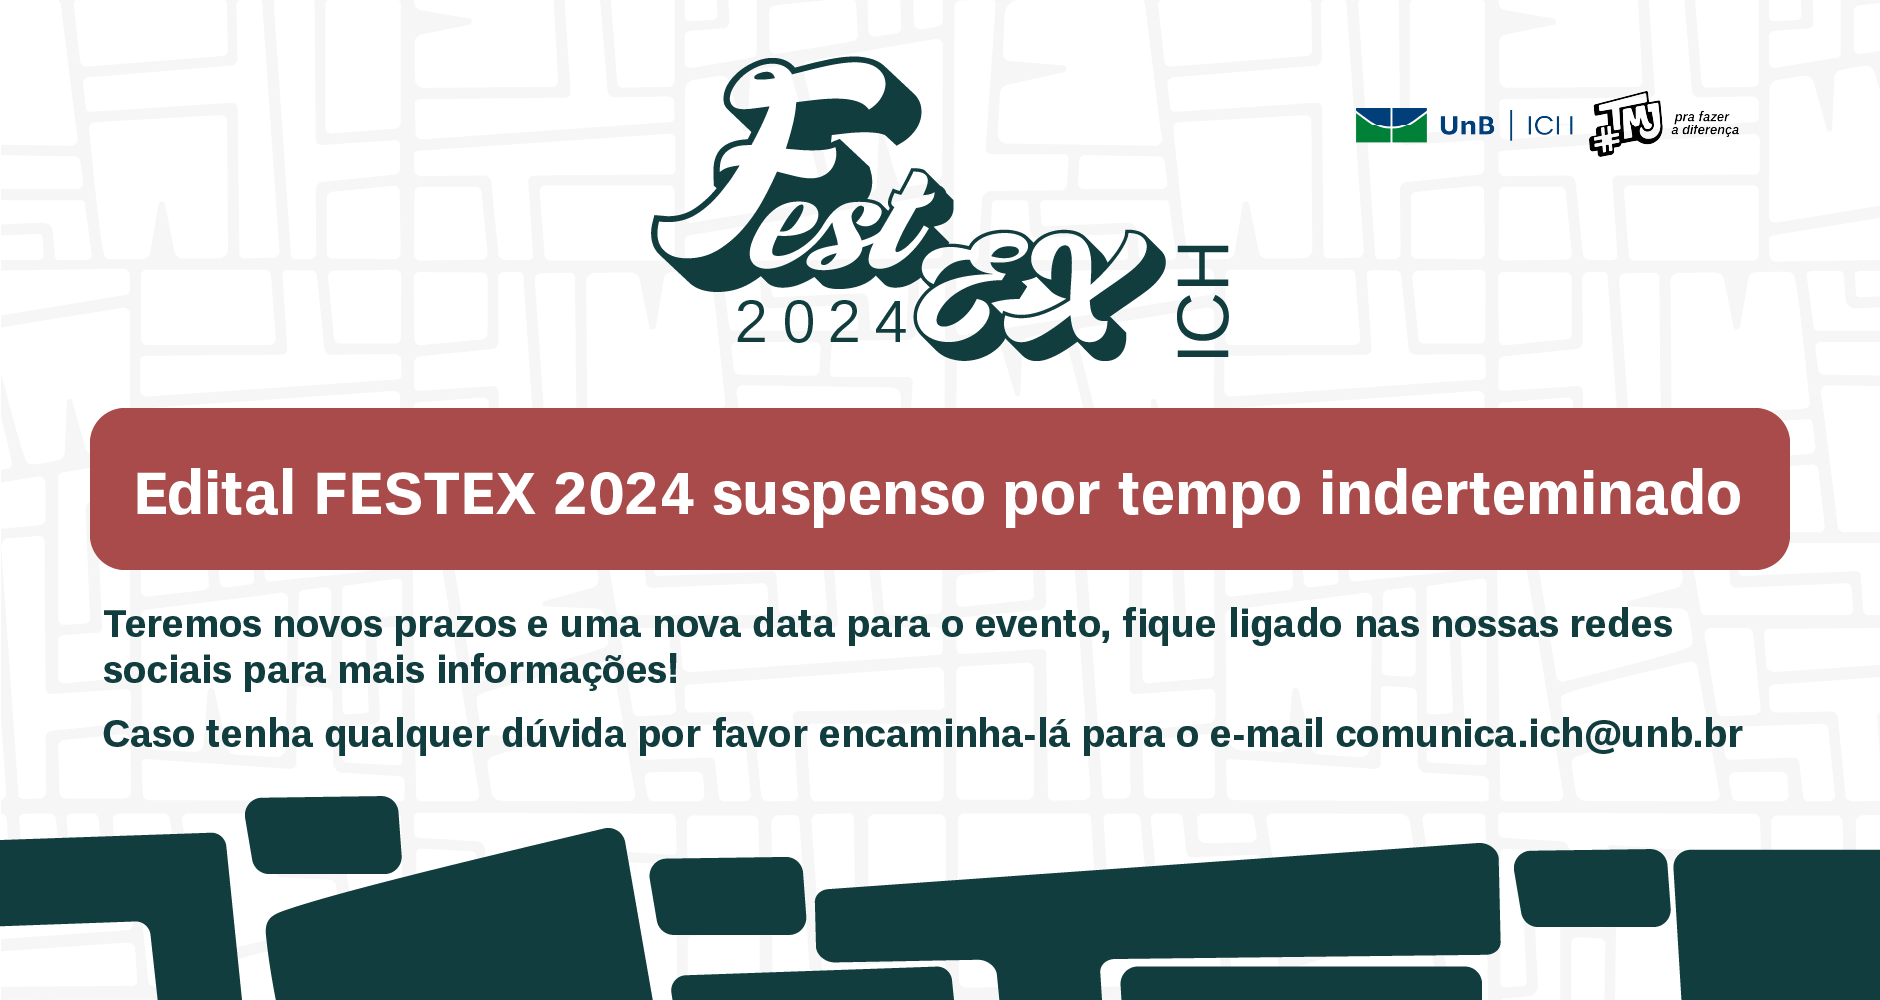 Edital Fetex 2024 cancelado por tempo interteminado!